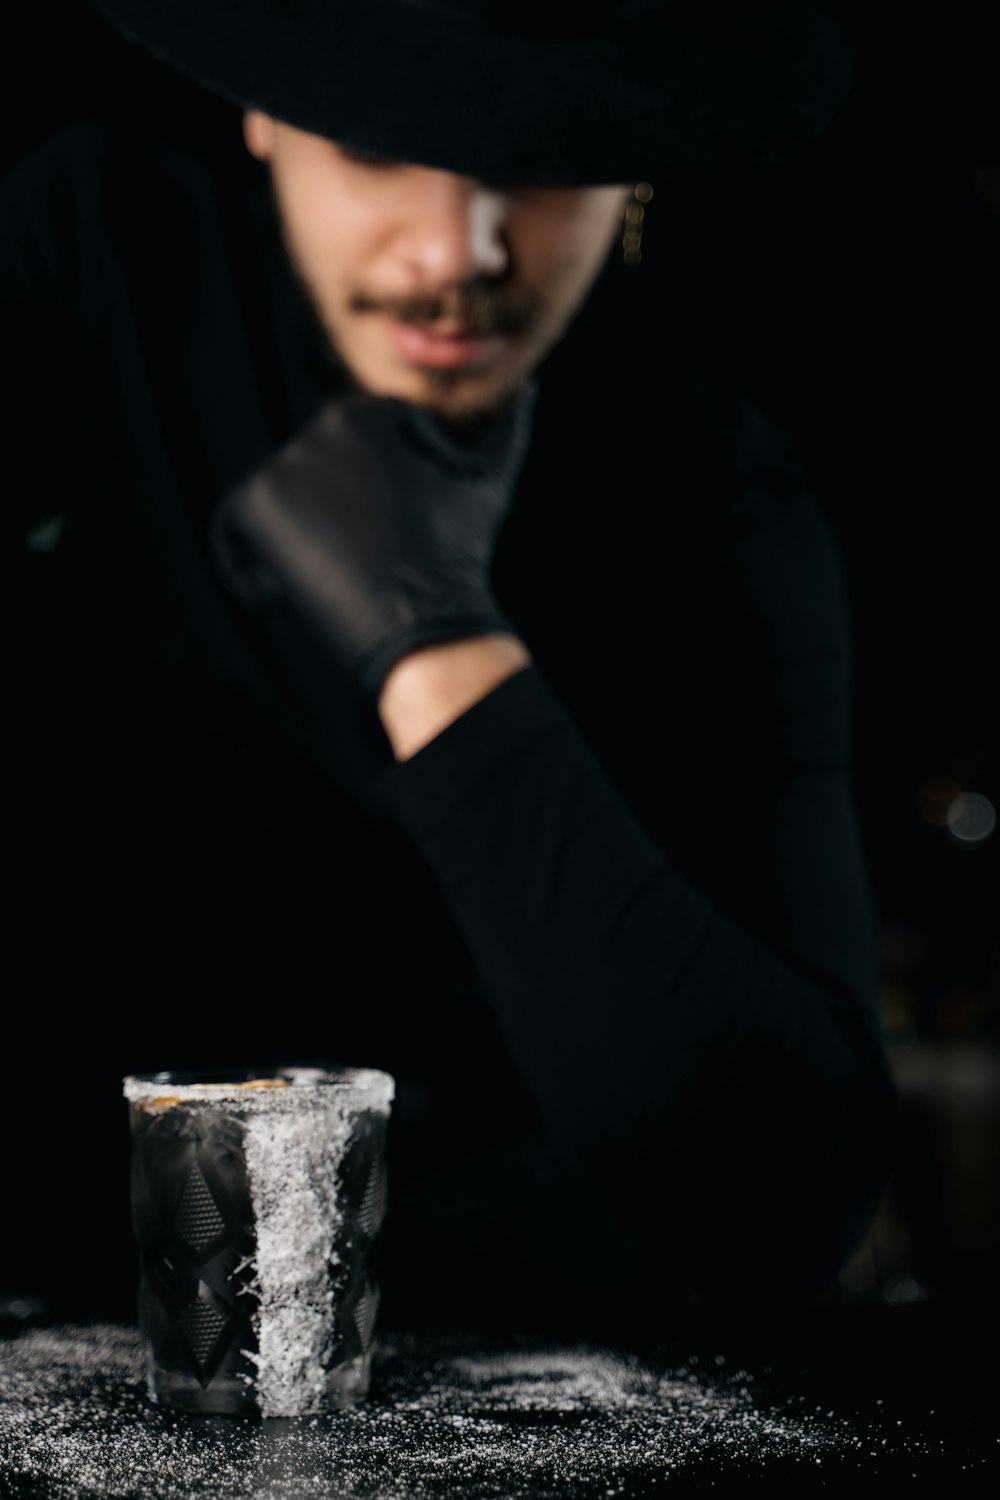 a man in a black hat is making a drink